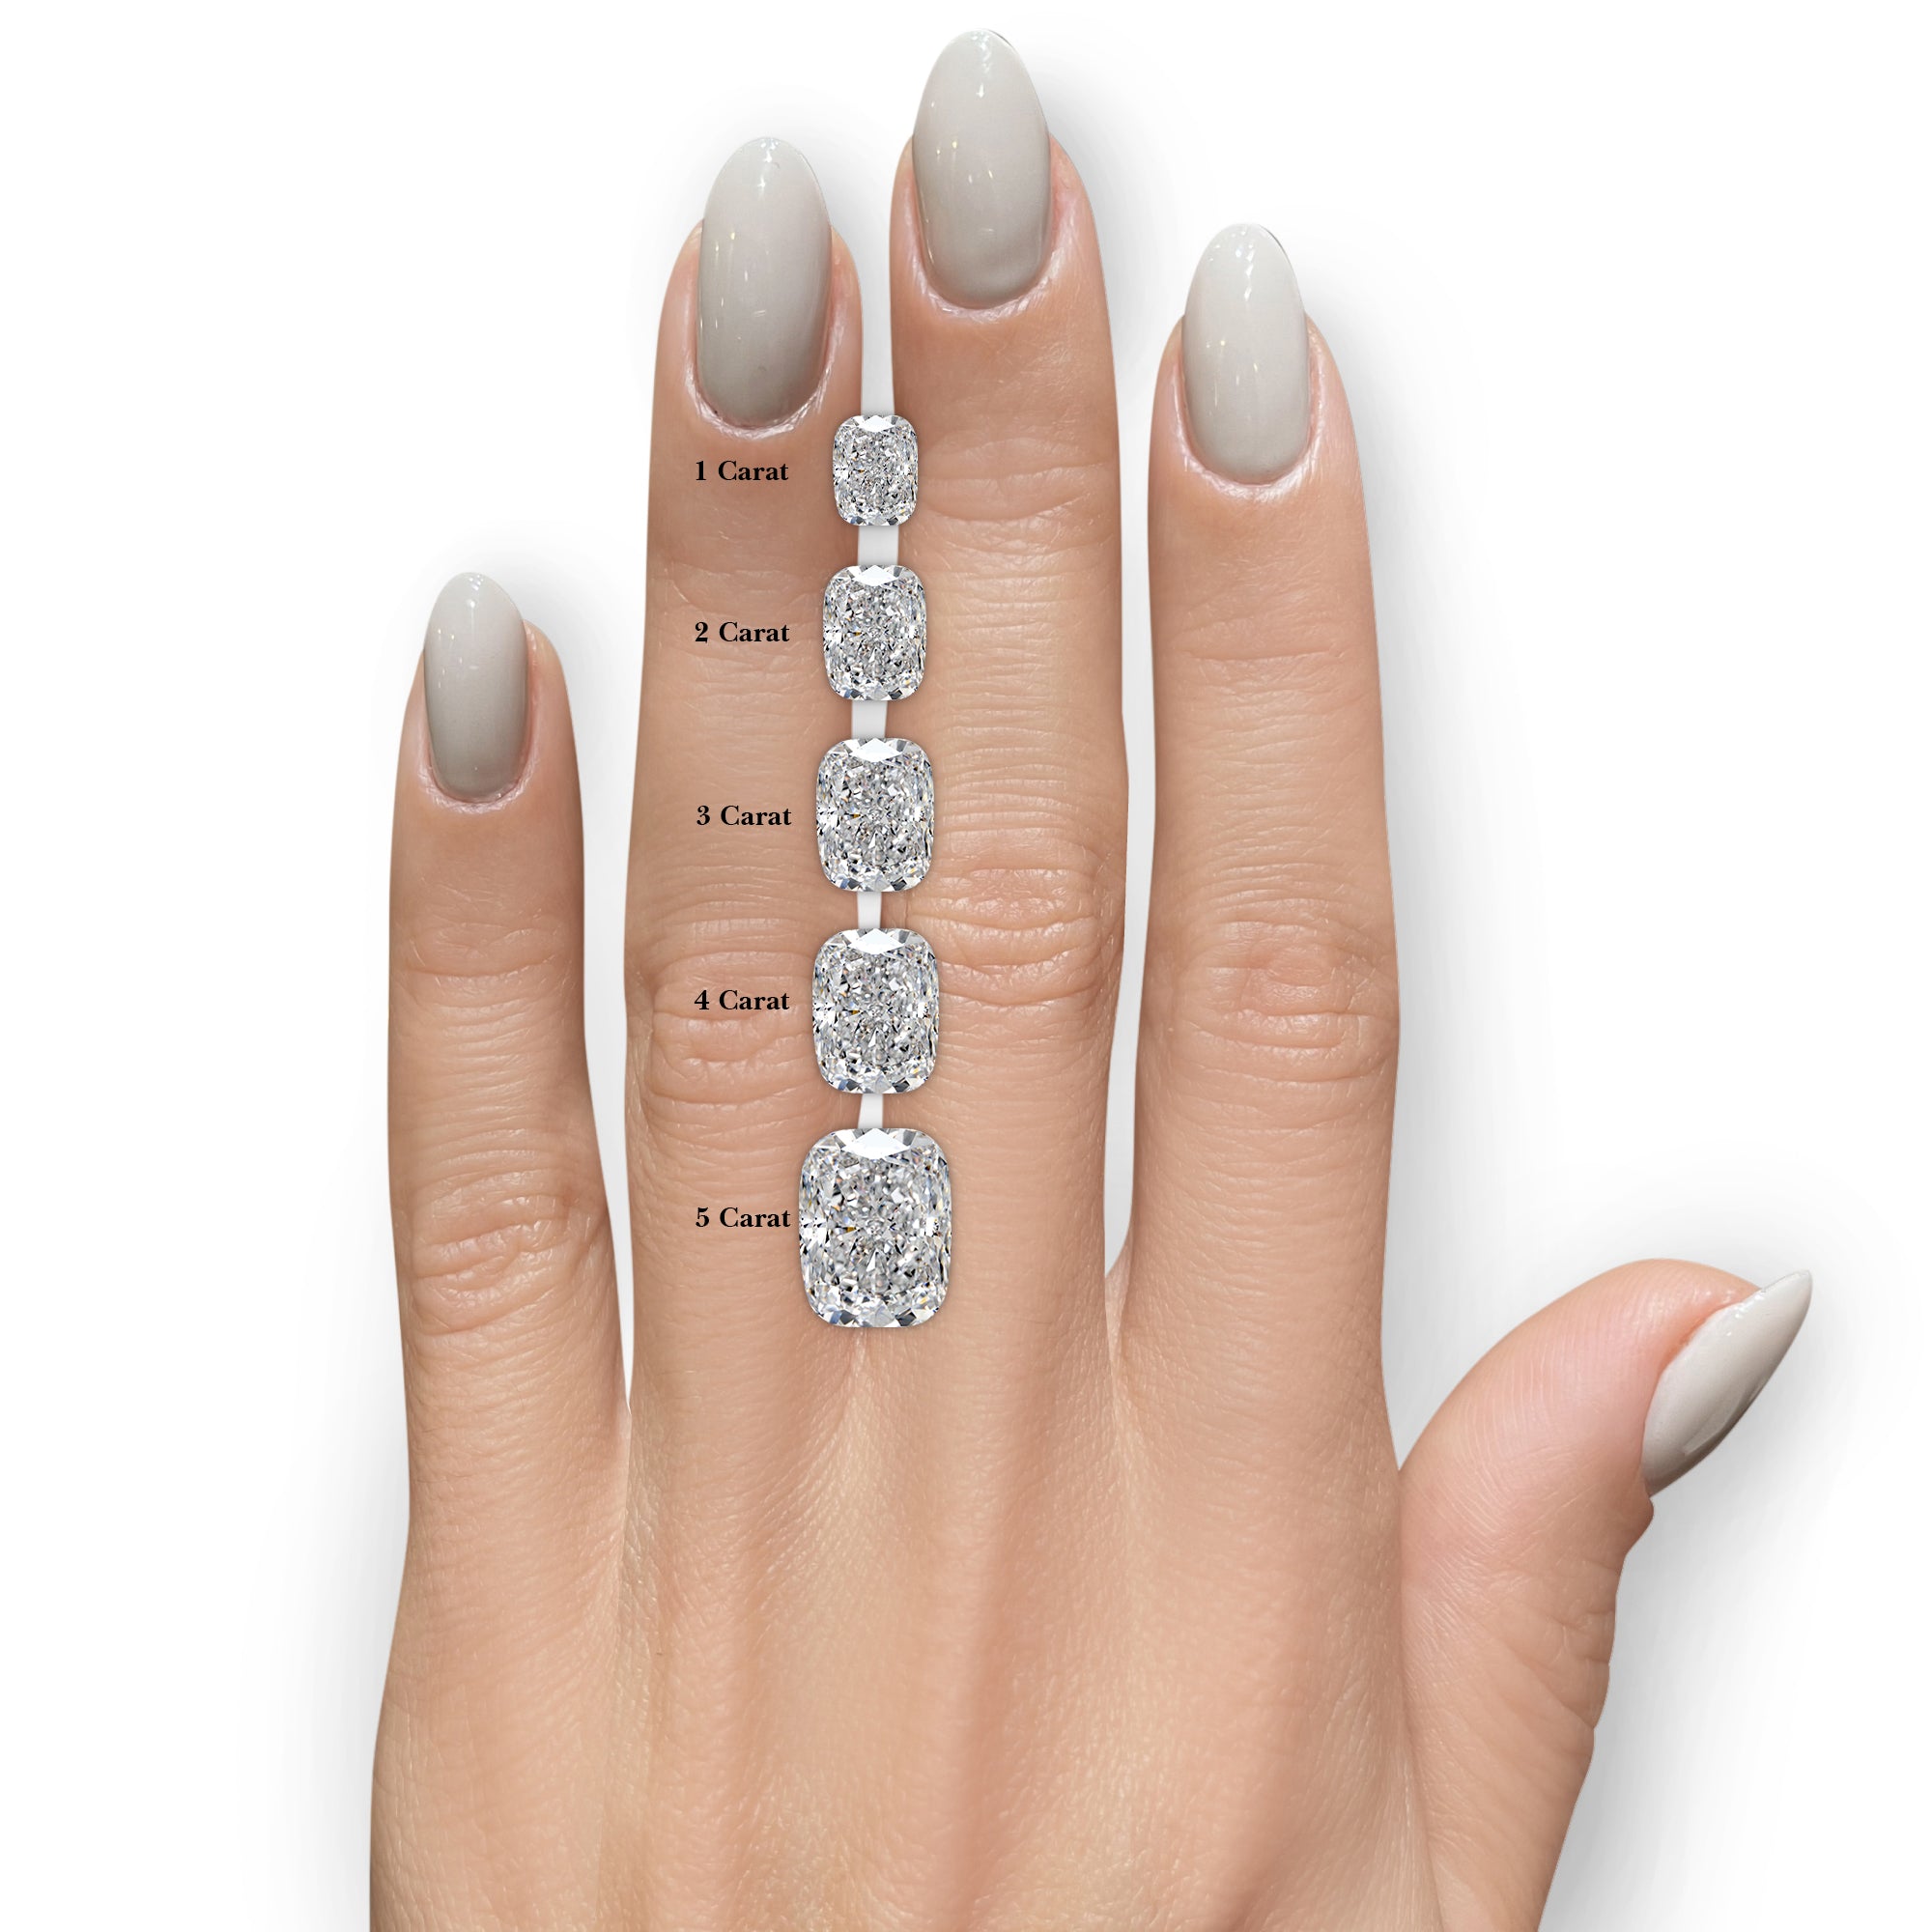 Joana Diamond Engagement Ring -18K Yellow Gold